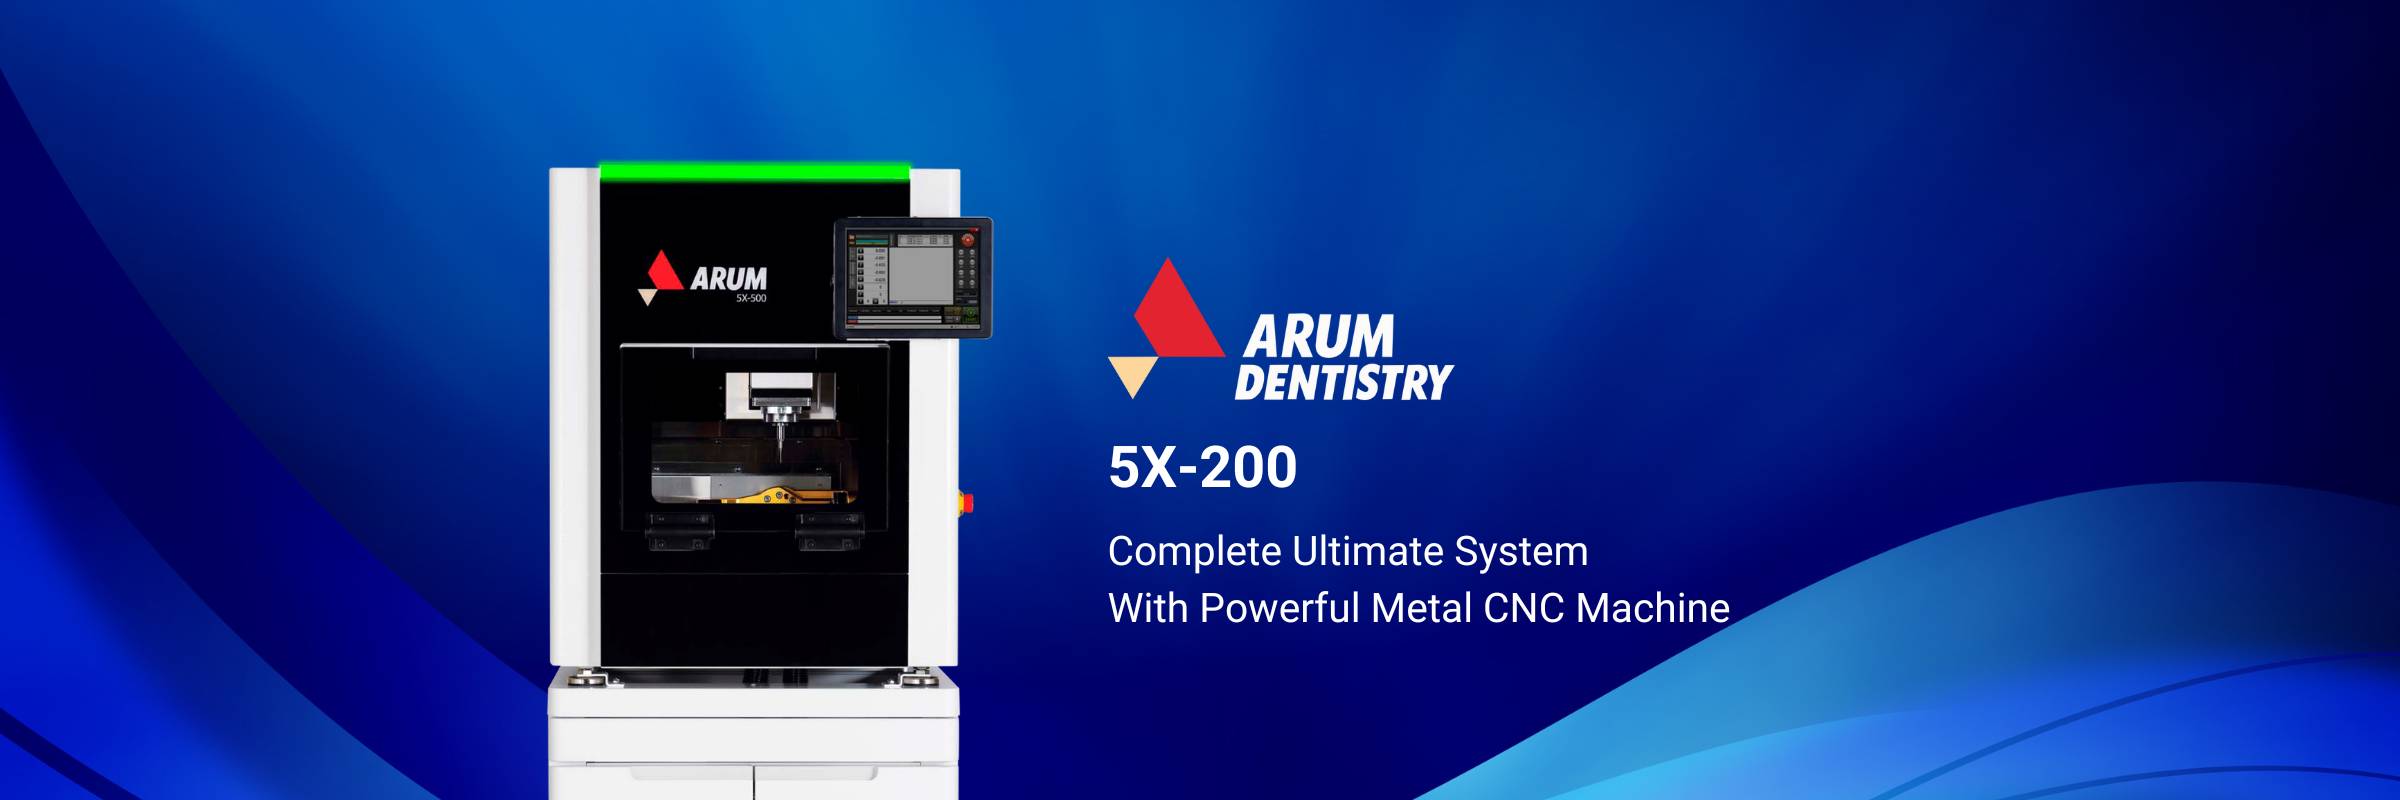 Arum 5x-200 Dental Milling Machine Product Page Image